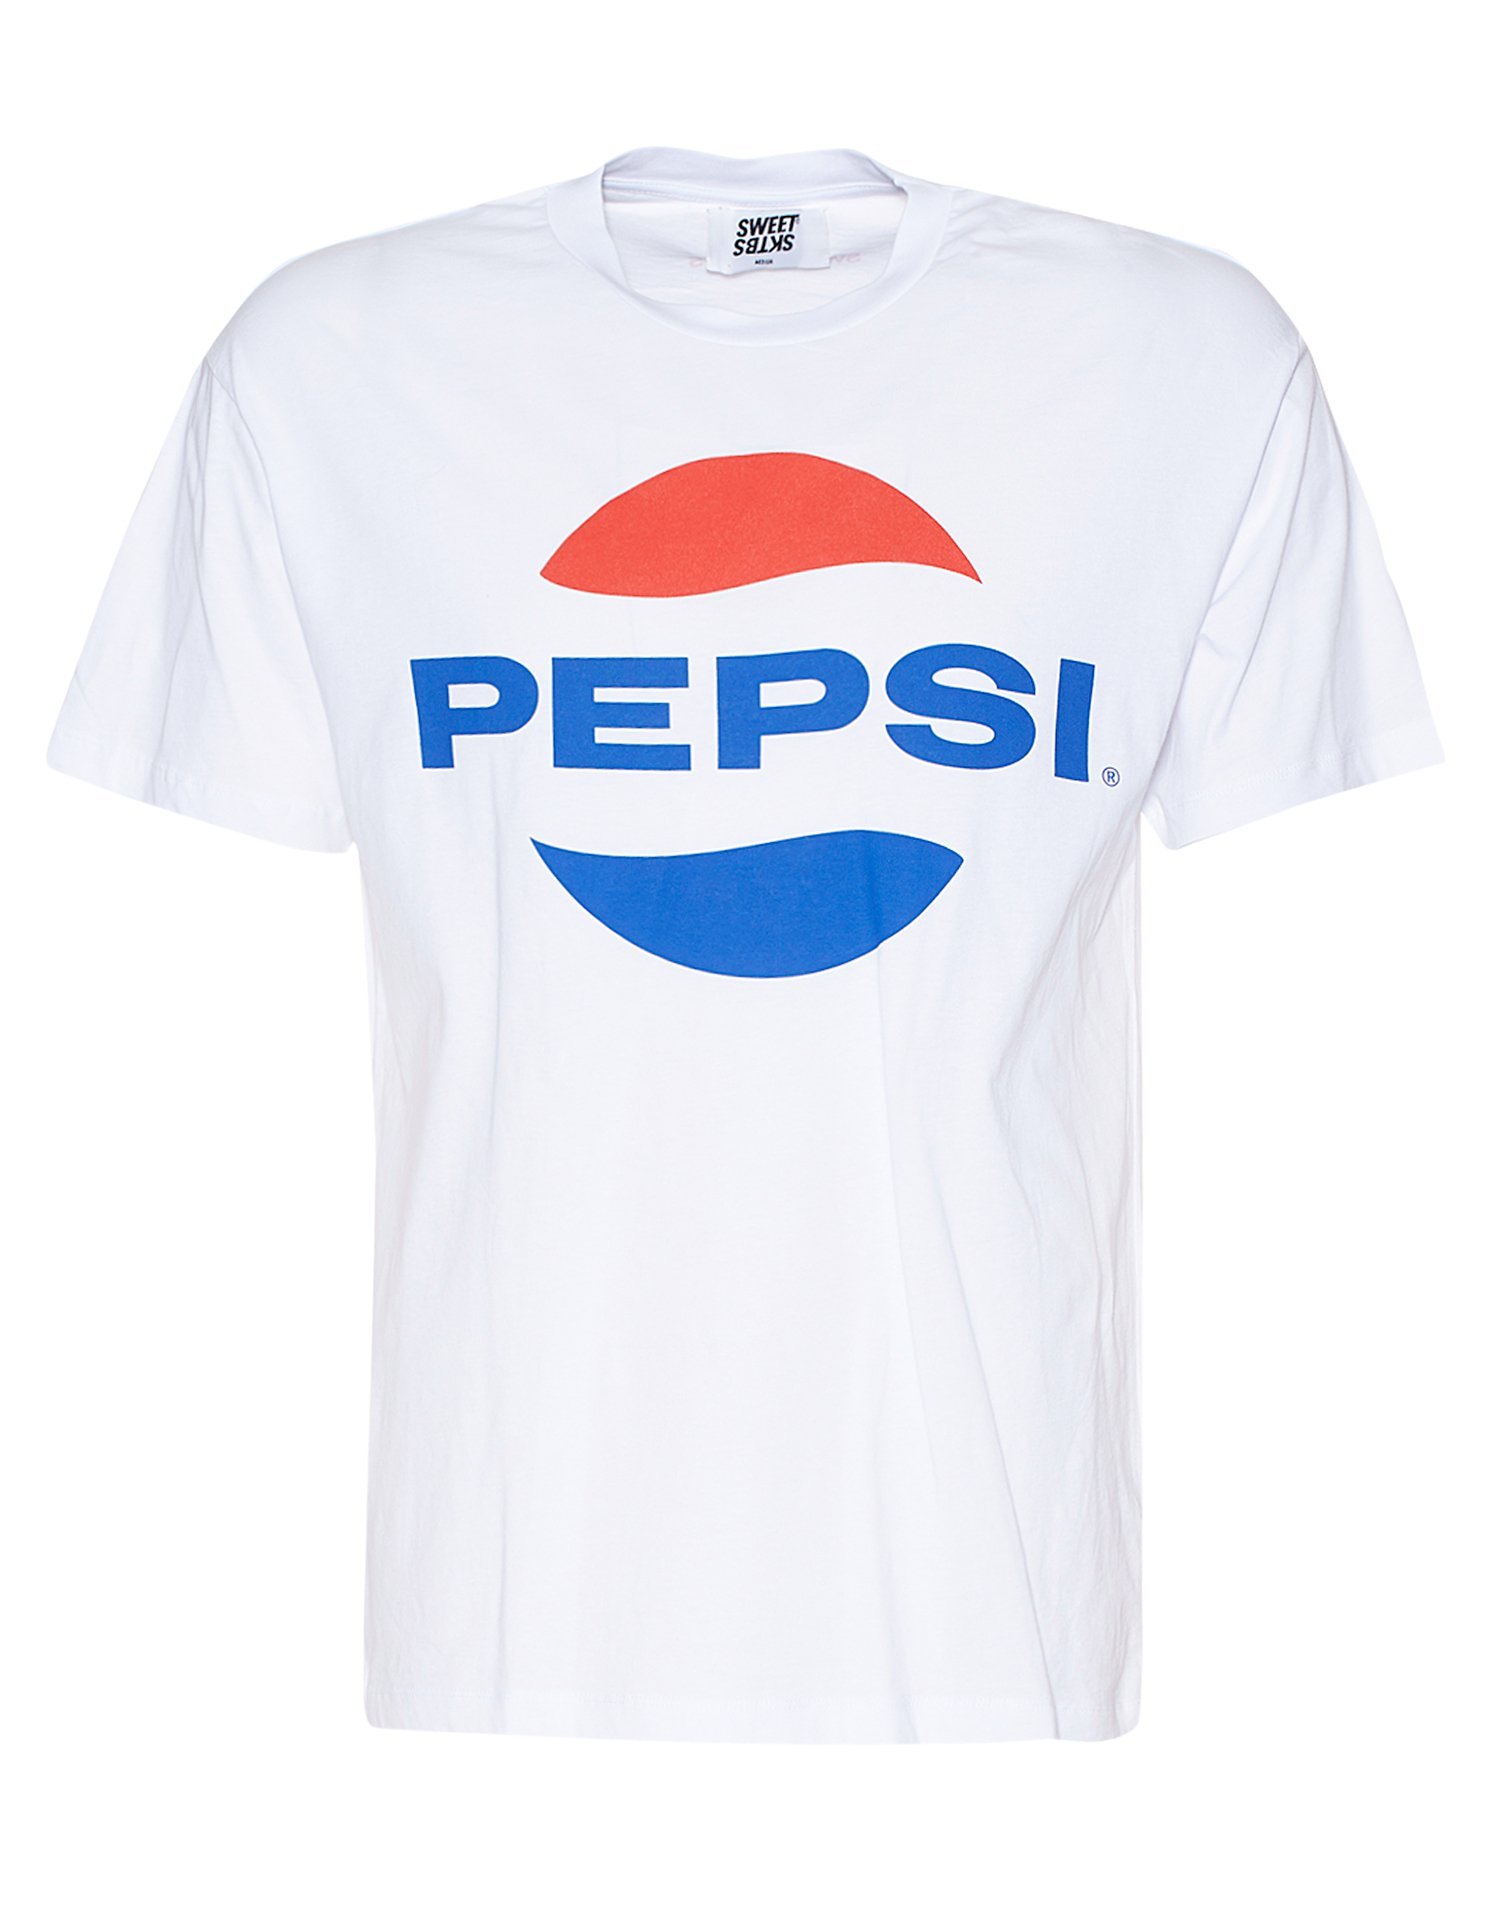 Sweet Pepsi Tee - Sweet Sktbs - White - T - Shirts & Linens - Clothing ...